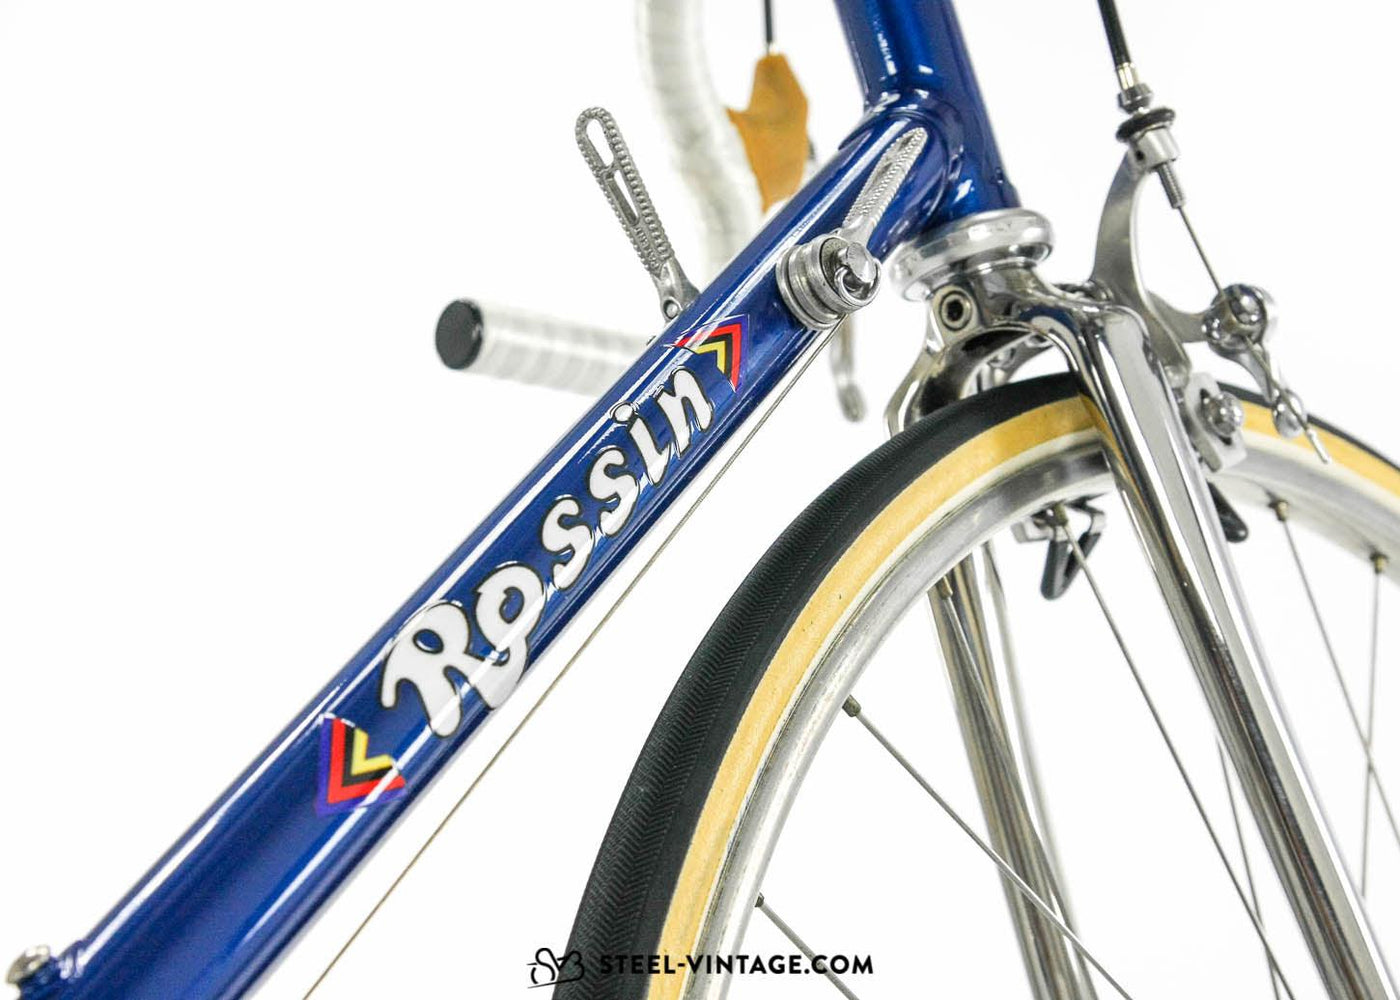 Rossin Record Pantographed Road Bike 1980s - Steel Vintage Bikes